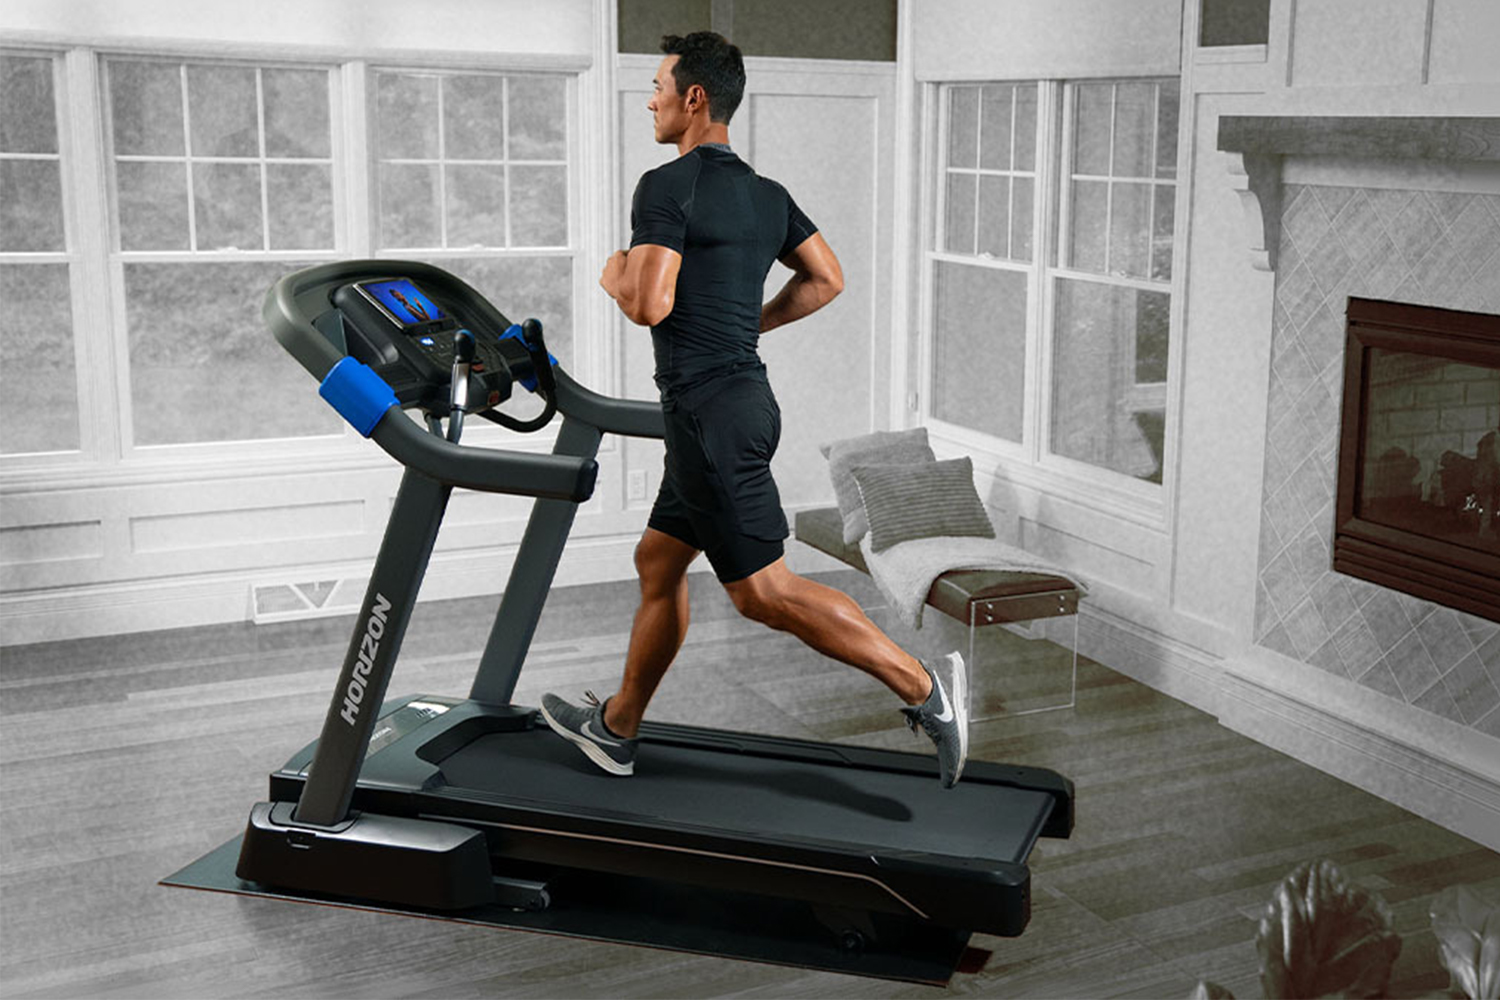 7.0 InsideHook Fitness - Horizon AT Affordable Review: Treadmill